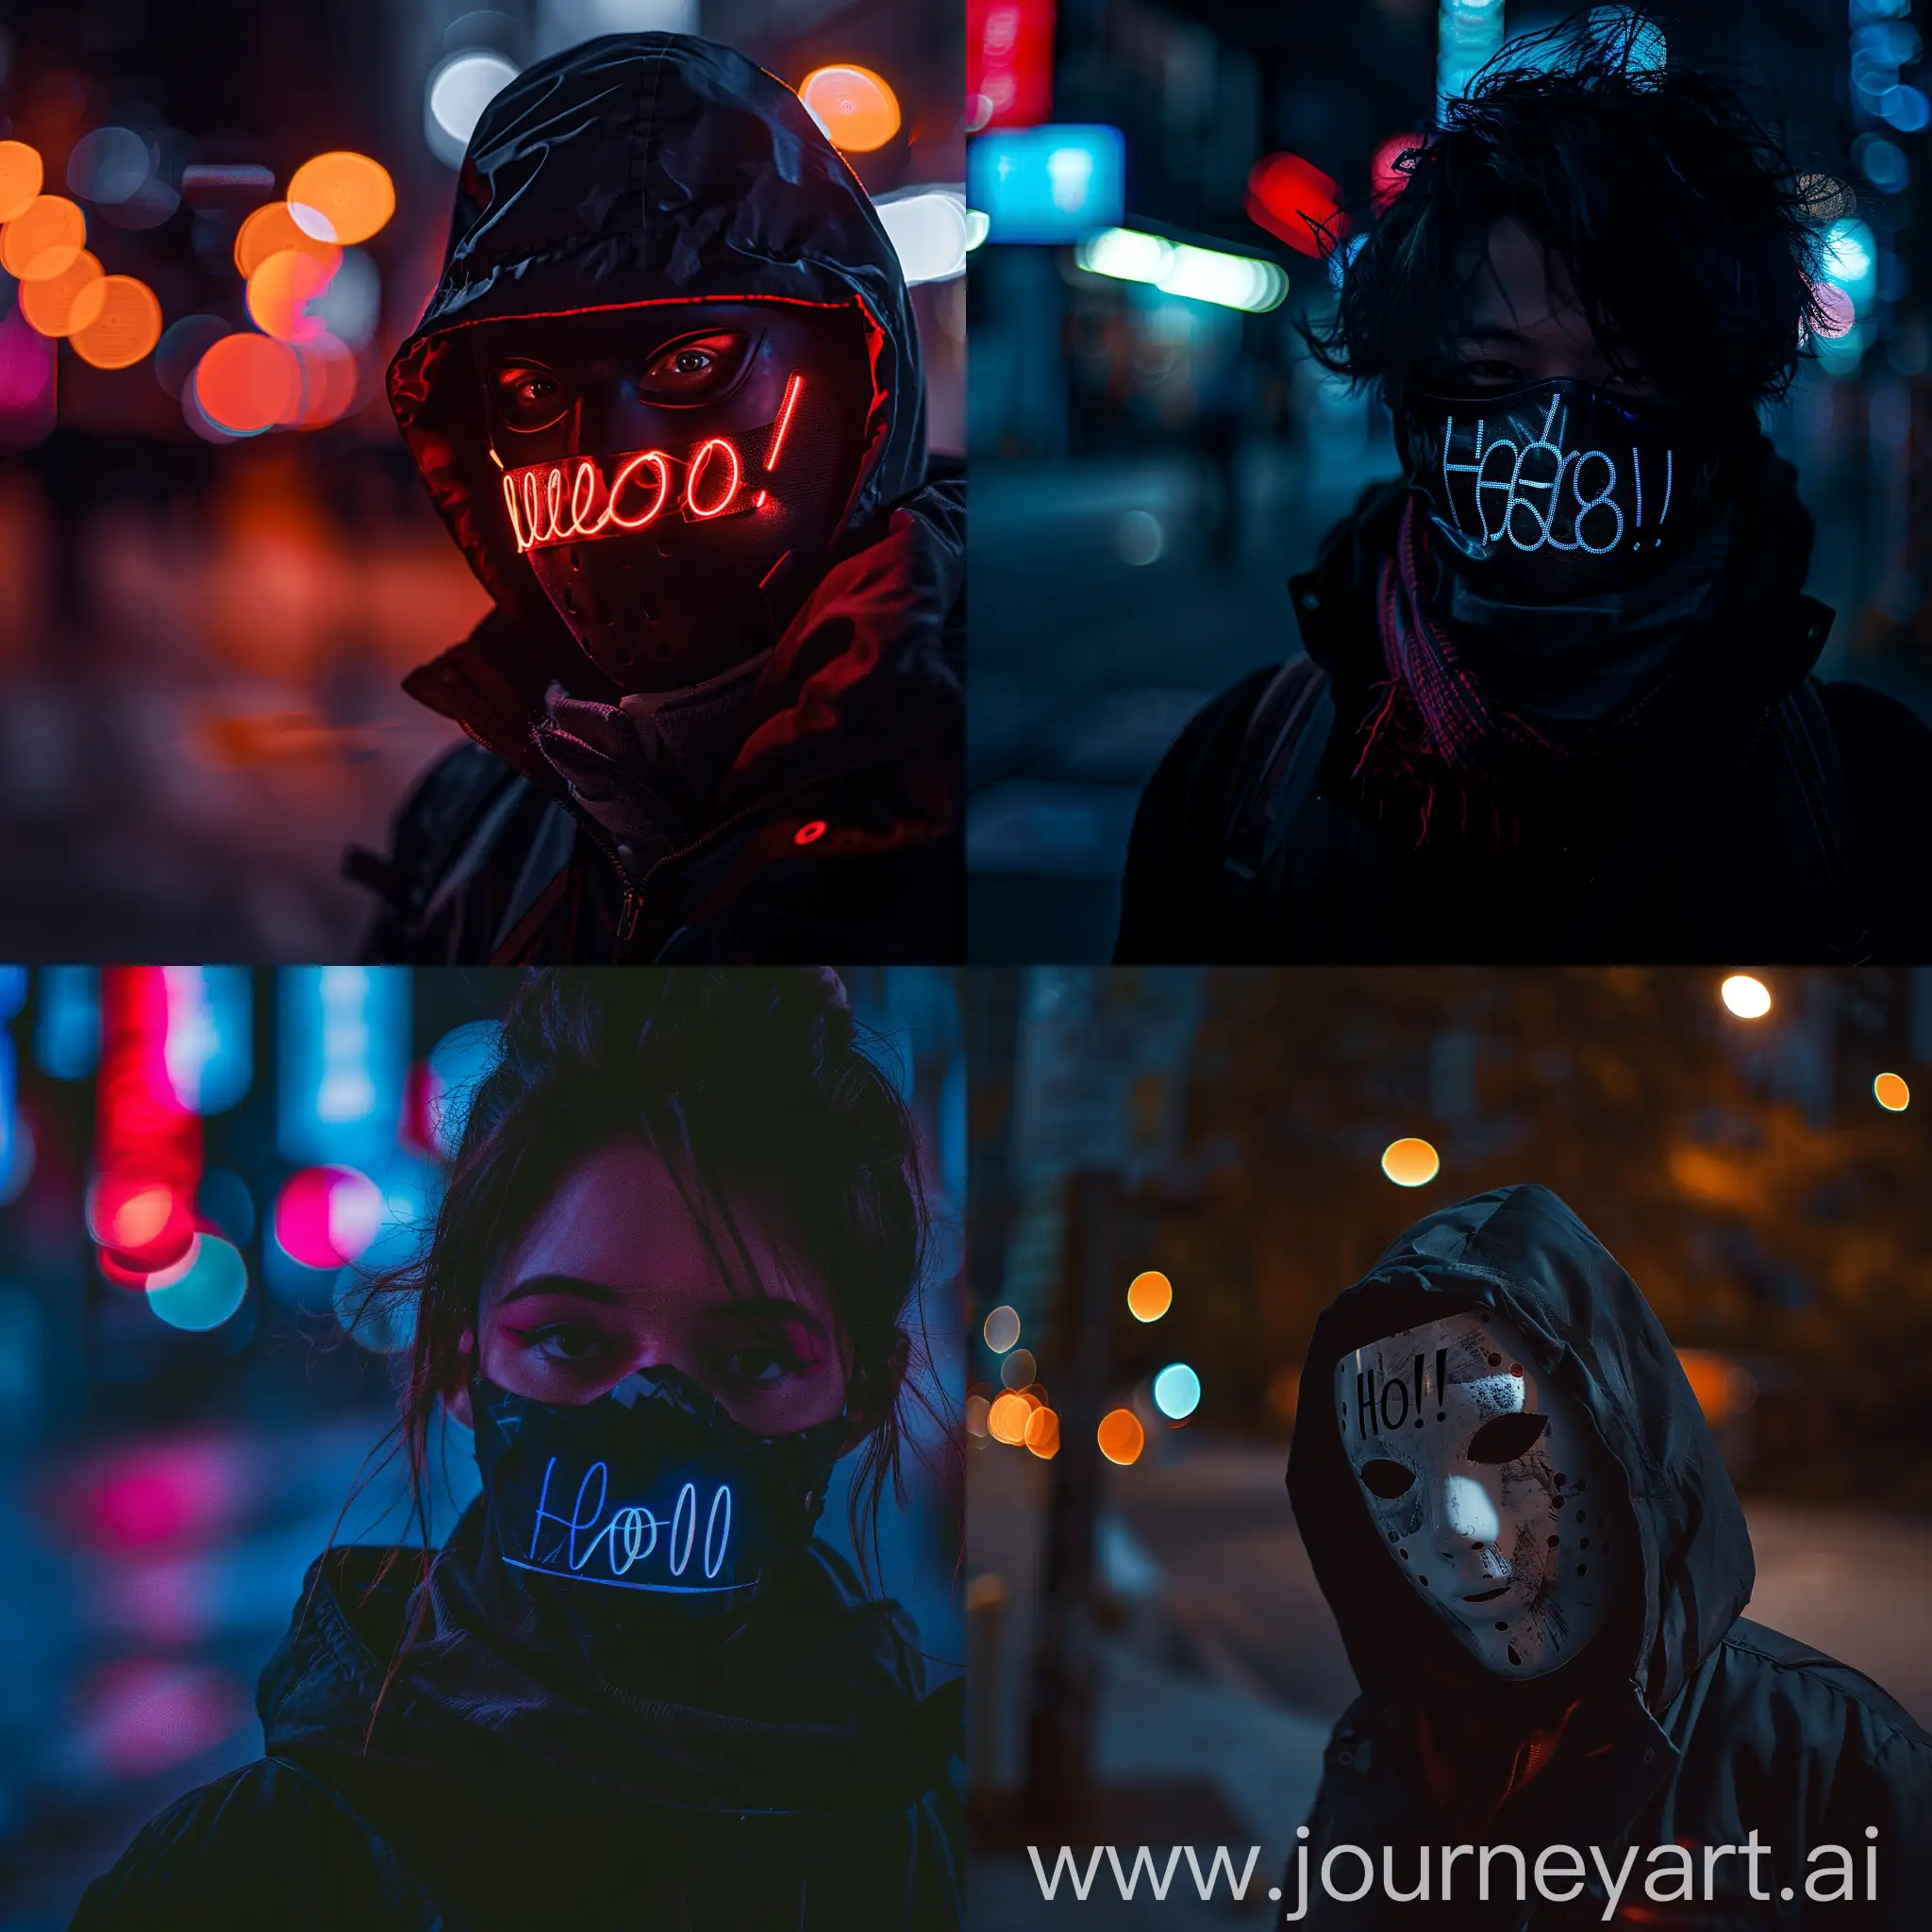 Cyber-Masked-Figure-in-Urban-Night-Scene-with-Hello-Inscription